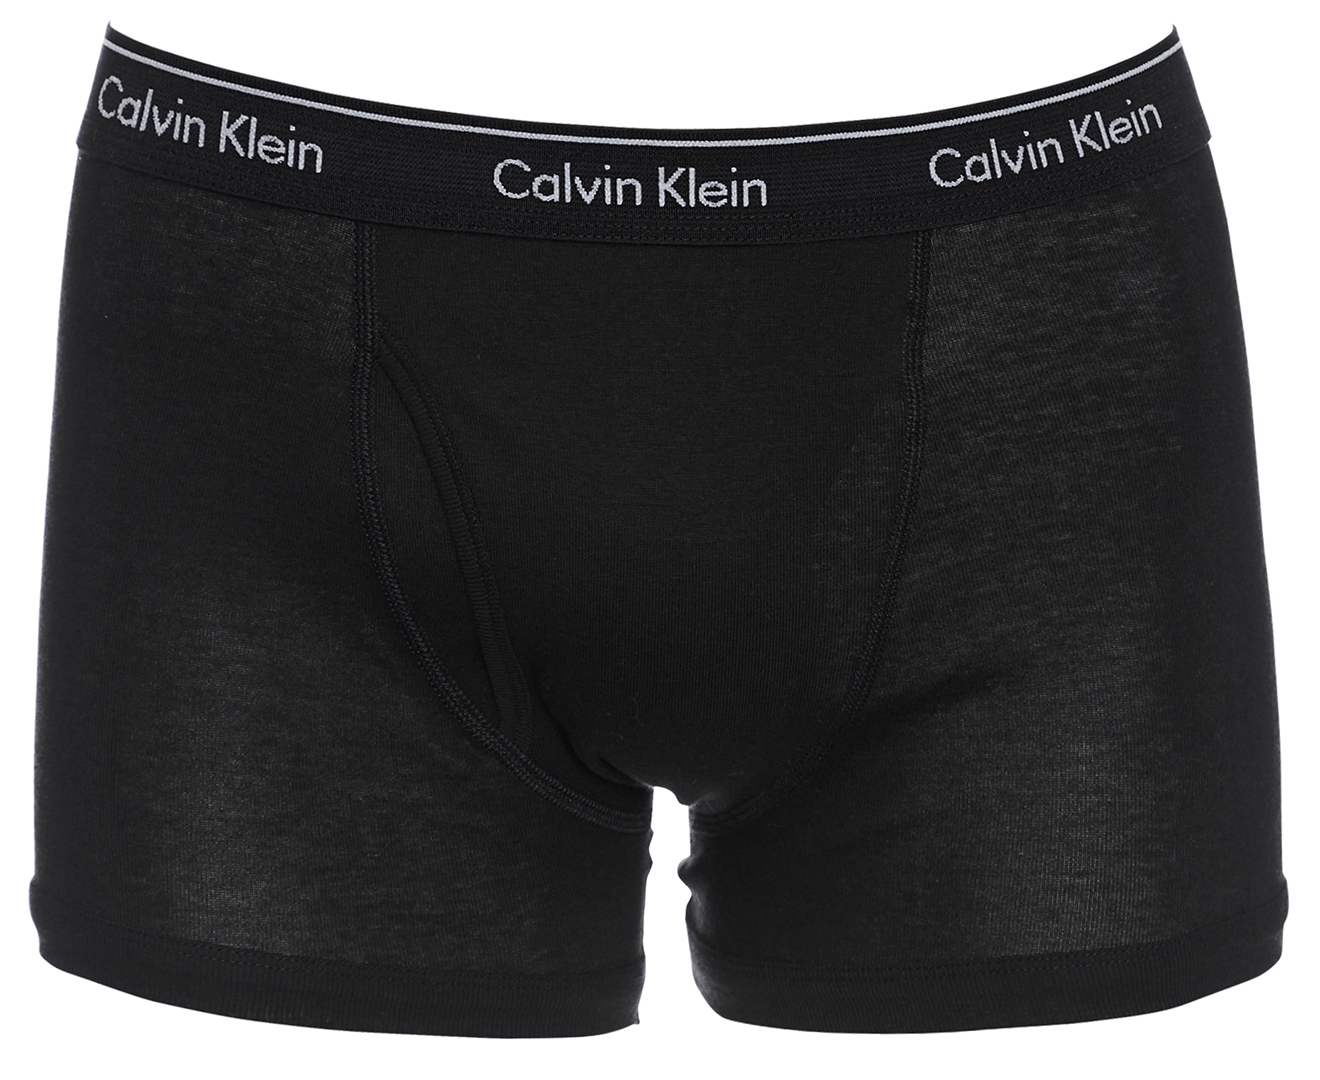 Calvin Klein Men's Cotton Classics Trunk 3-Pack - Dark Charcoal/Grey ...